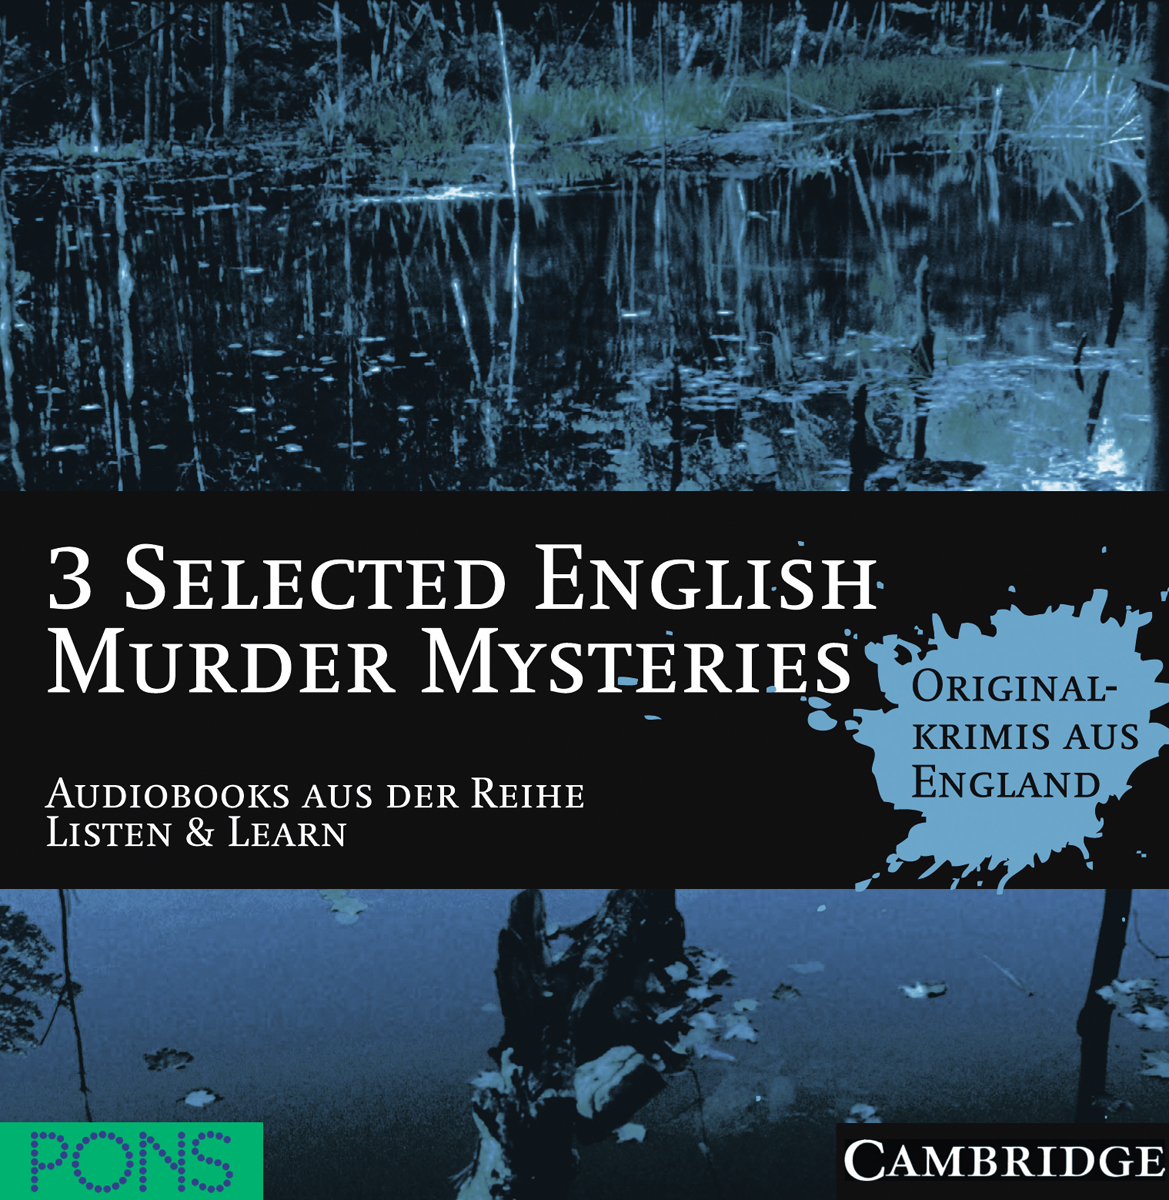 PONS/Cambridge: 3 selected Murder Mysteries, Audiobooks